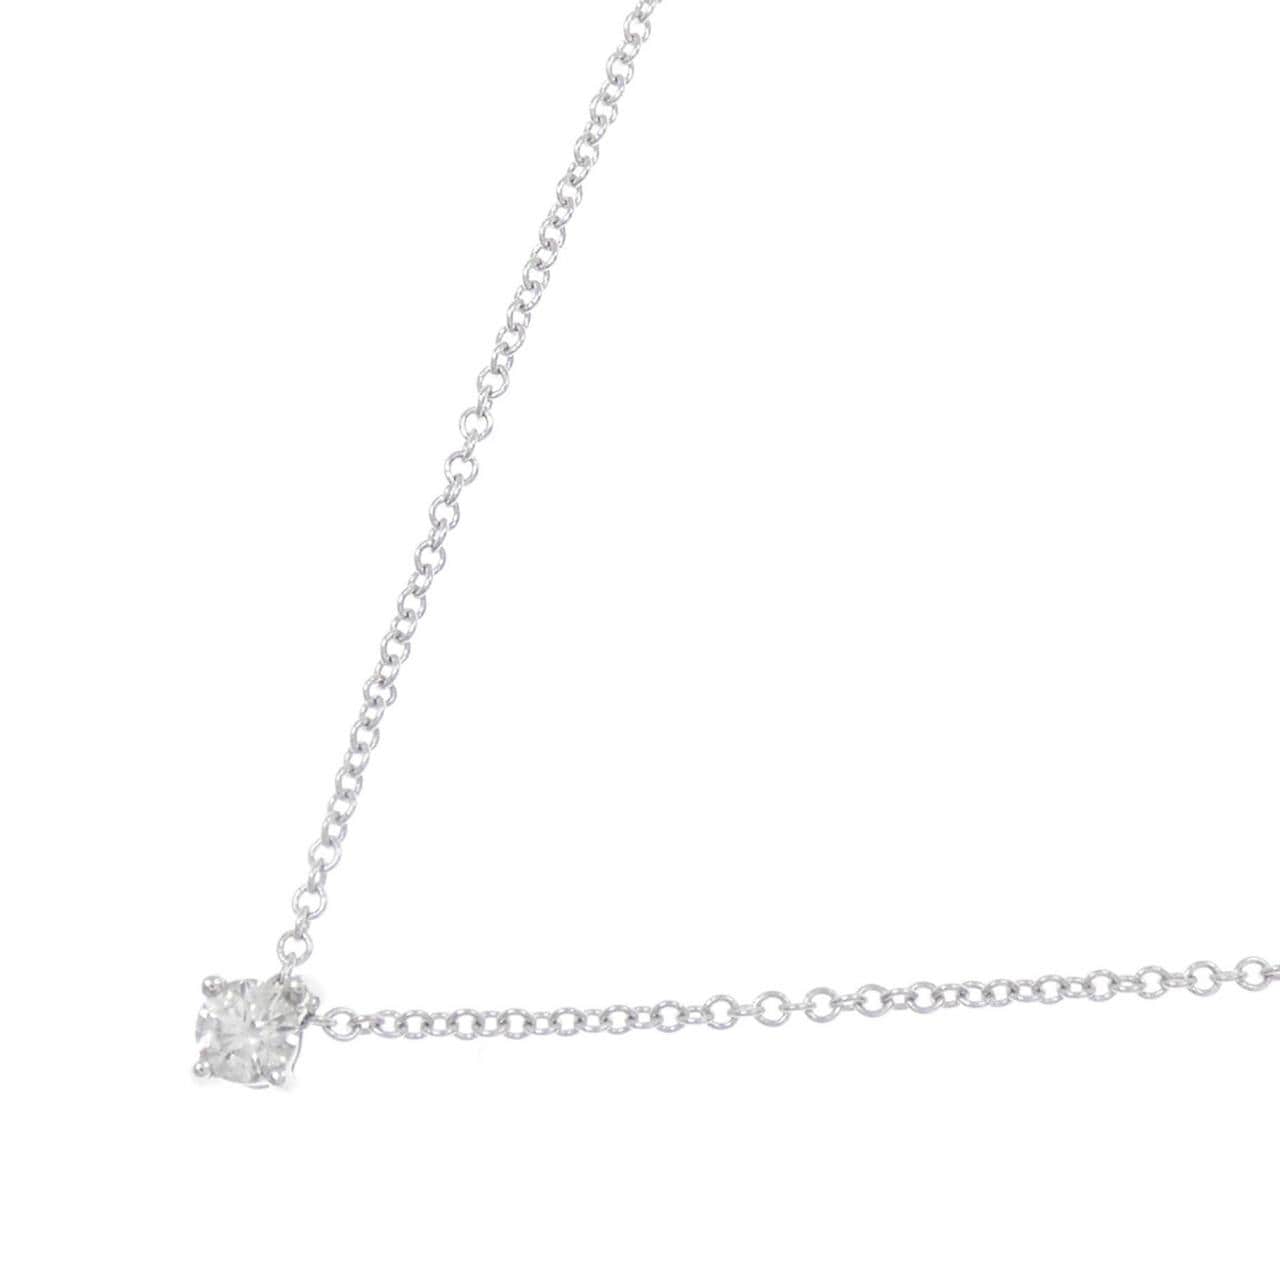 K18WG Solitaire Diamond Necklace